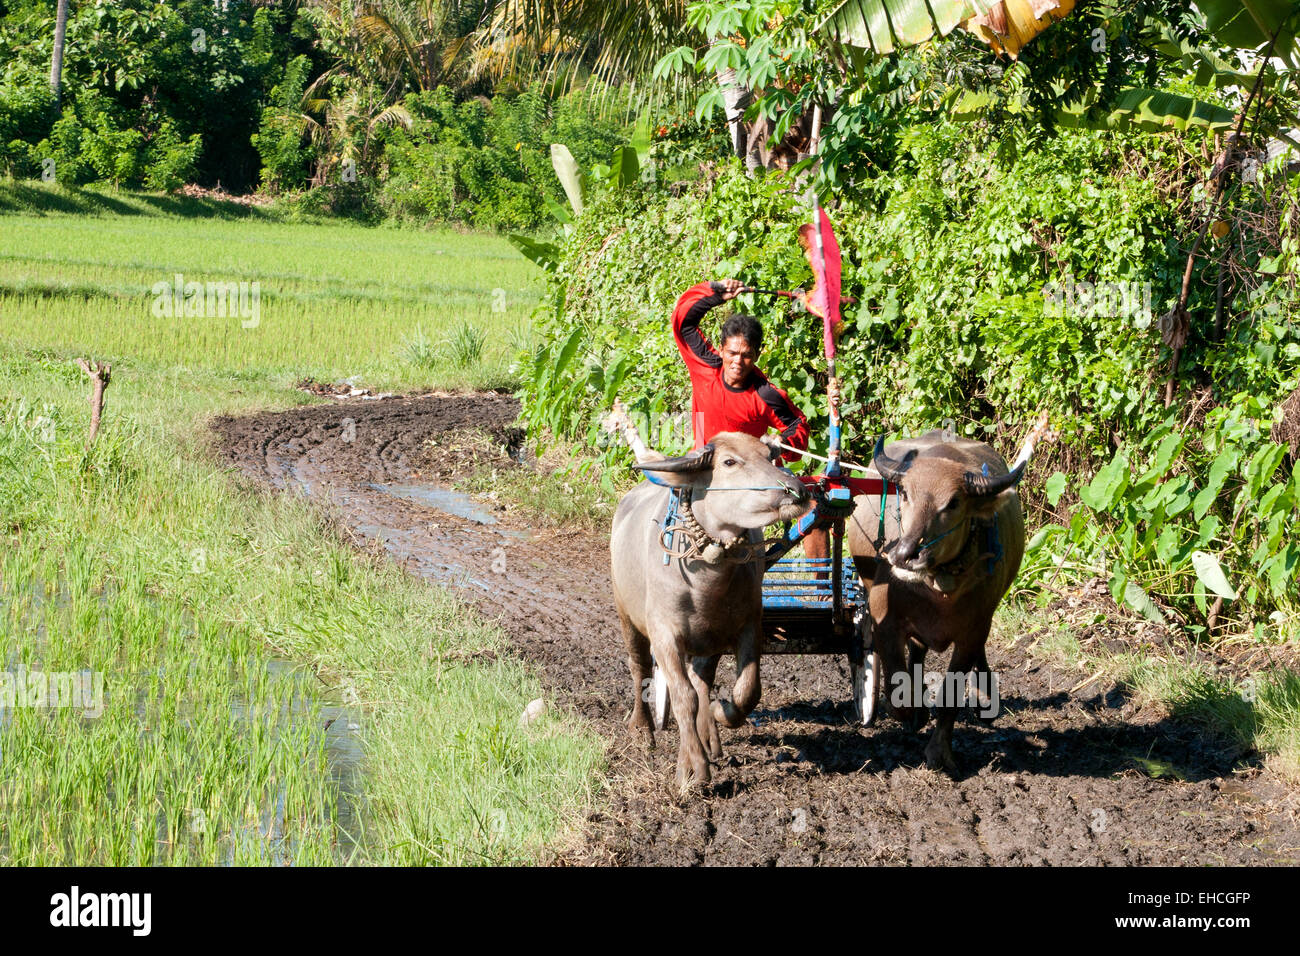 Water buffalo racing in the rice paddies of Bali. Stock Photo